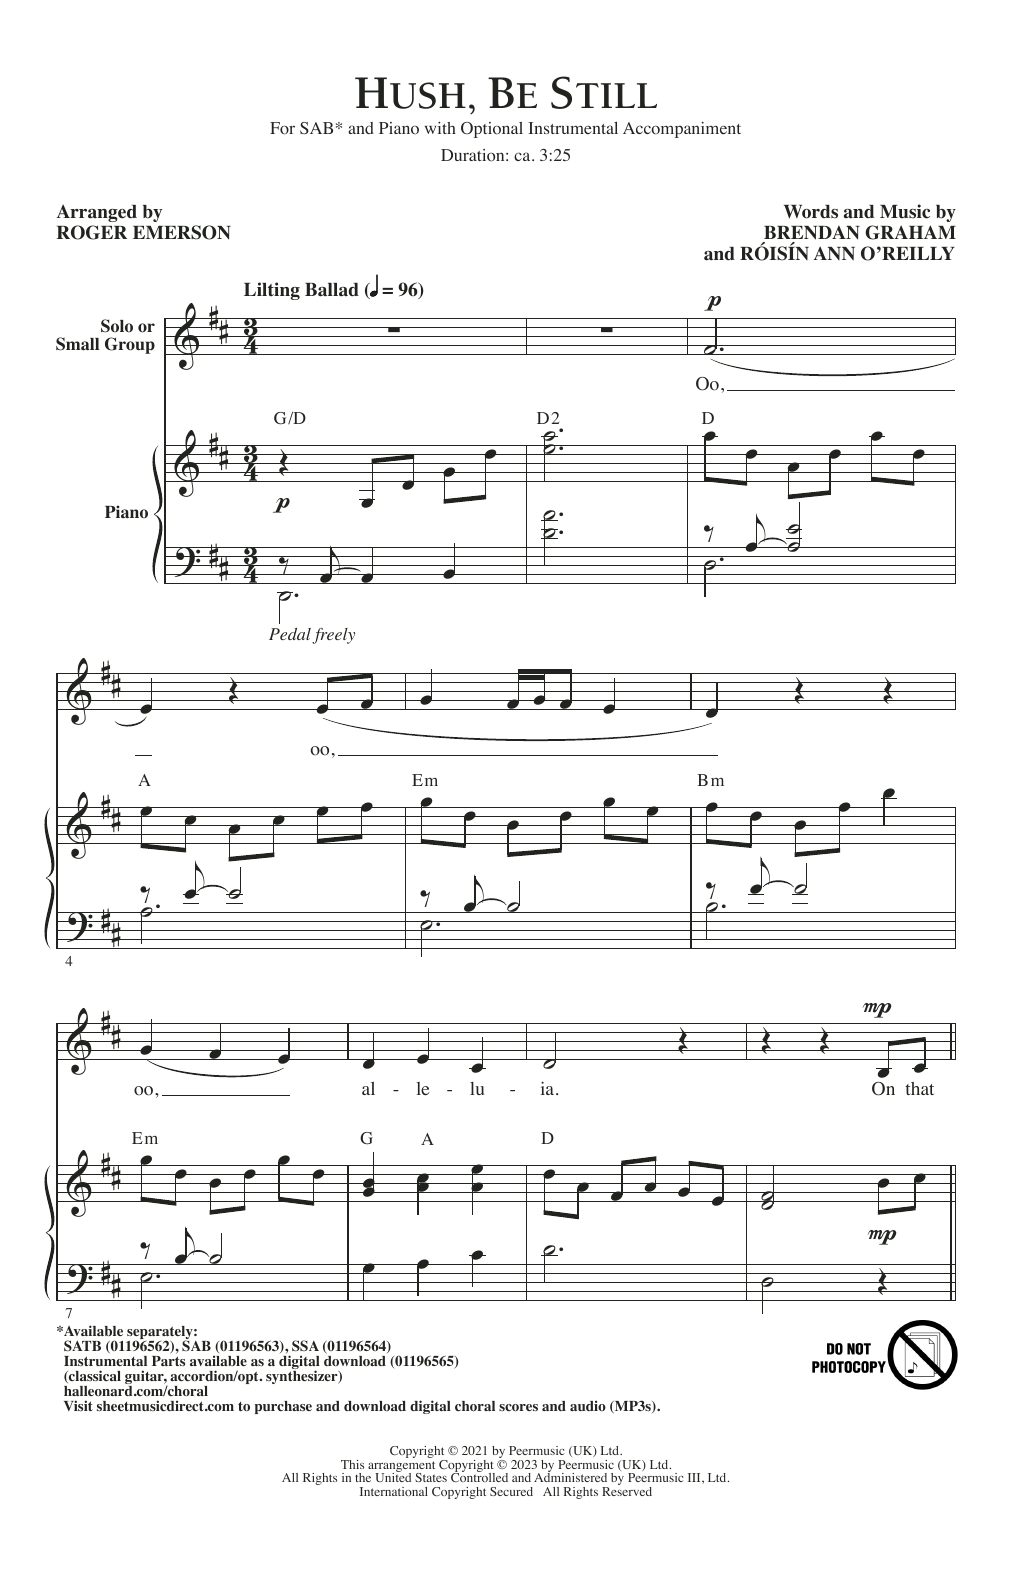 Brendan Graham and Róisín Ann O'Reilly Hush, Be Still (arr. Roger Emerson) Sheet Music Notes & Chords for SATB Choir - Download or Print PDF